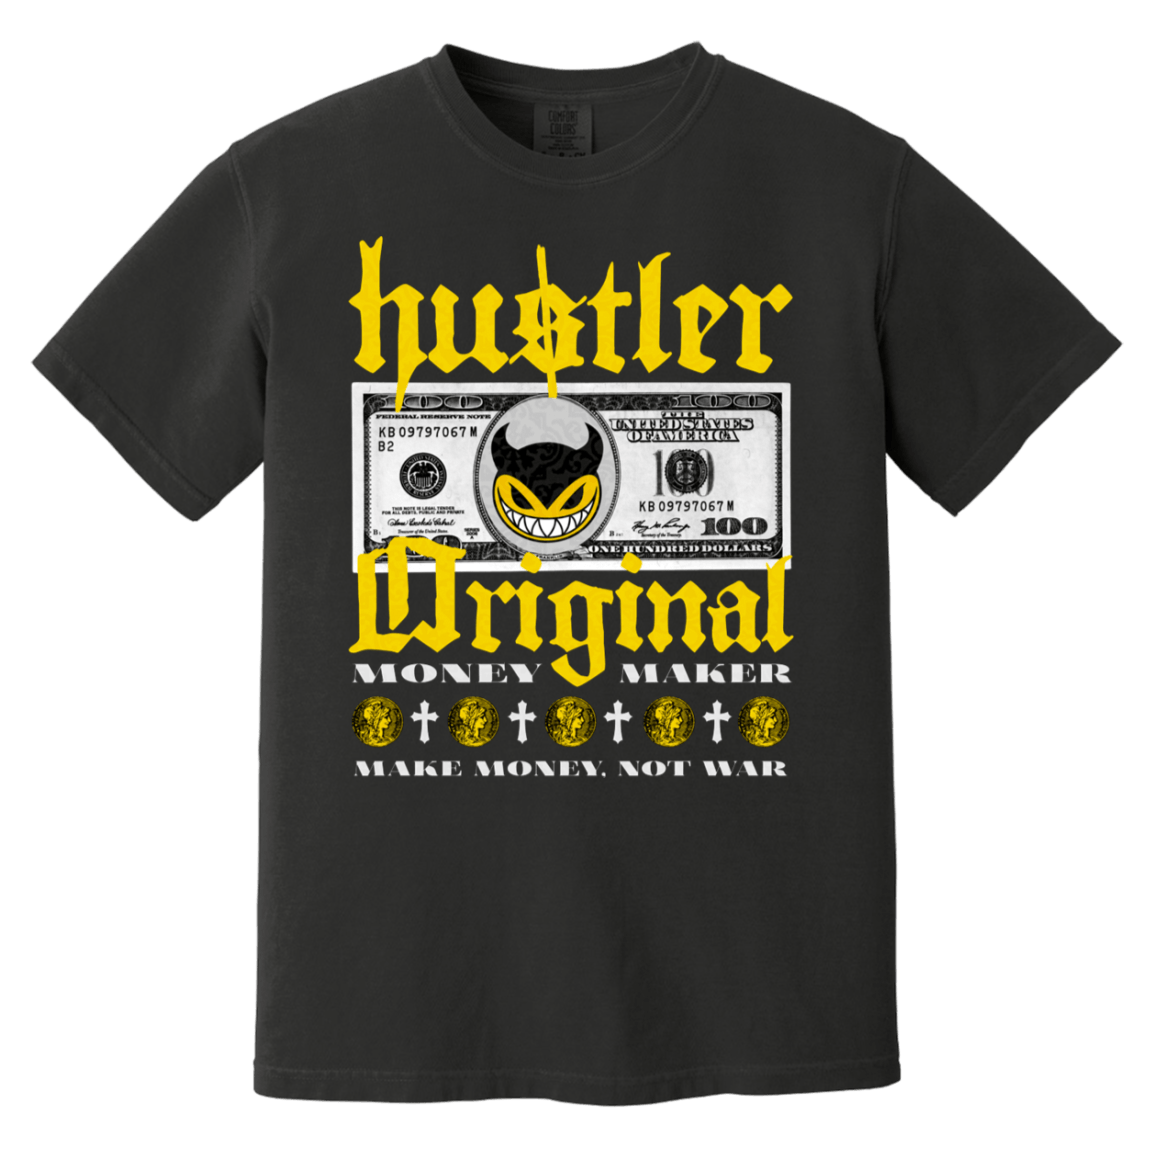 Hustlers Original Streetwear Tee - T-Shirts